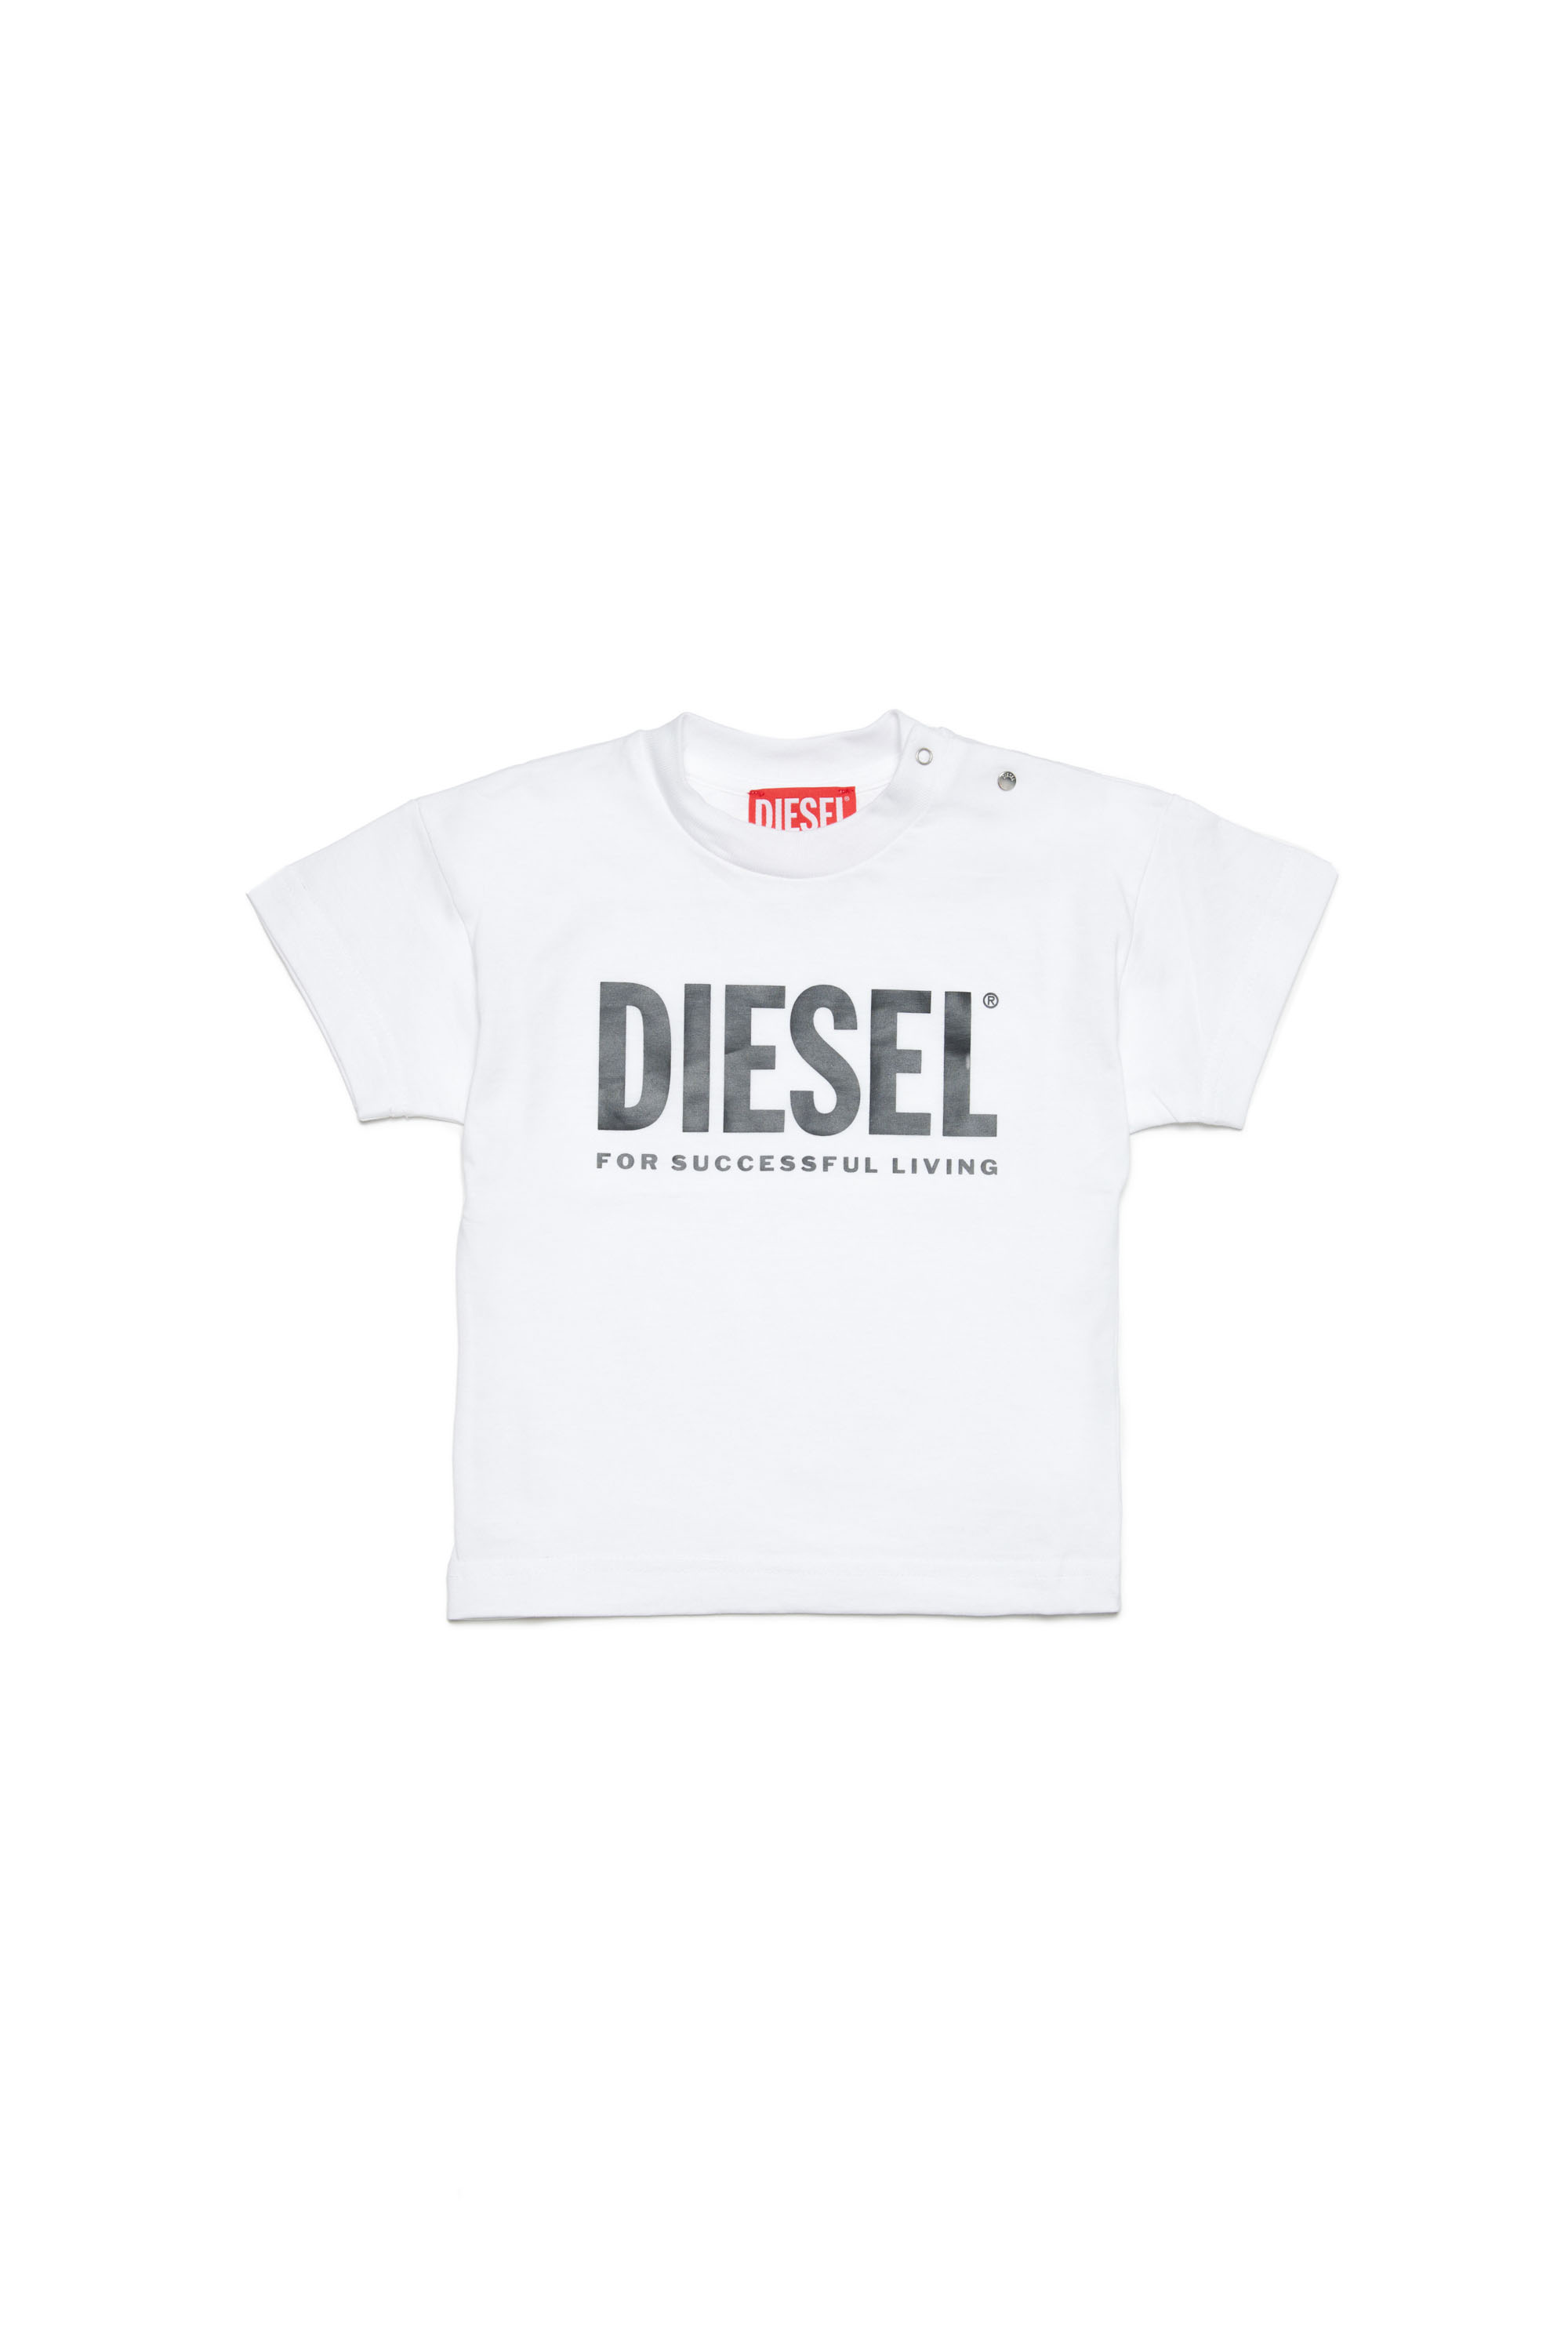 Clothing, Jeans, Accessories Kids and Teens | Diesel®